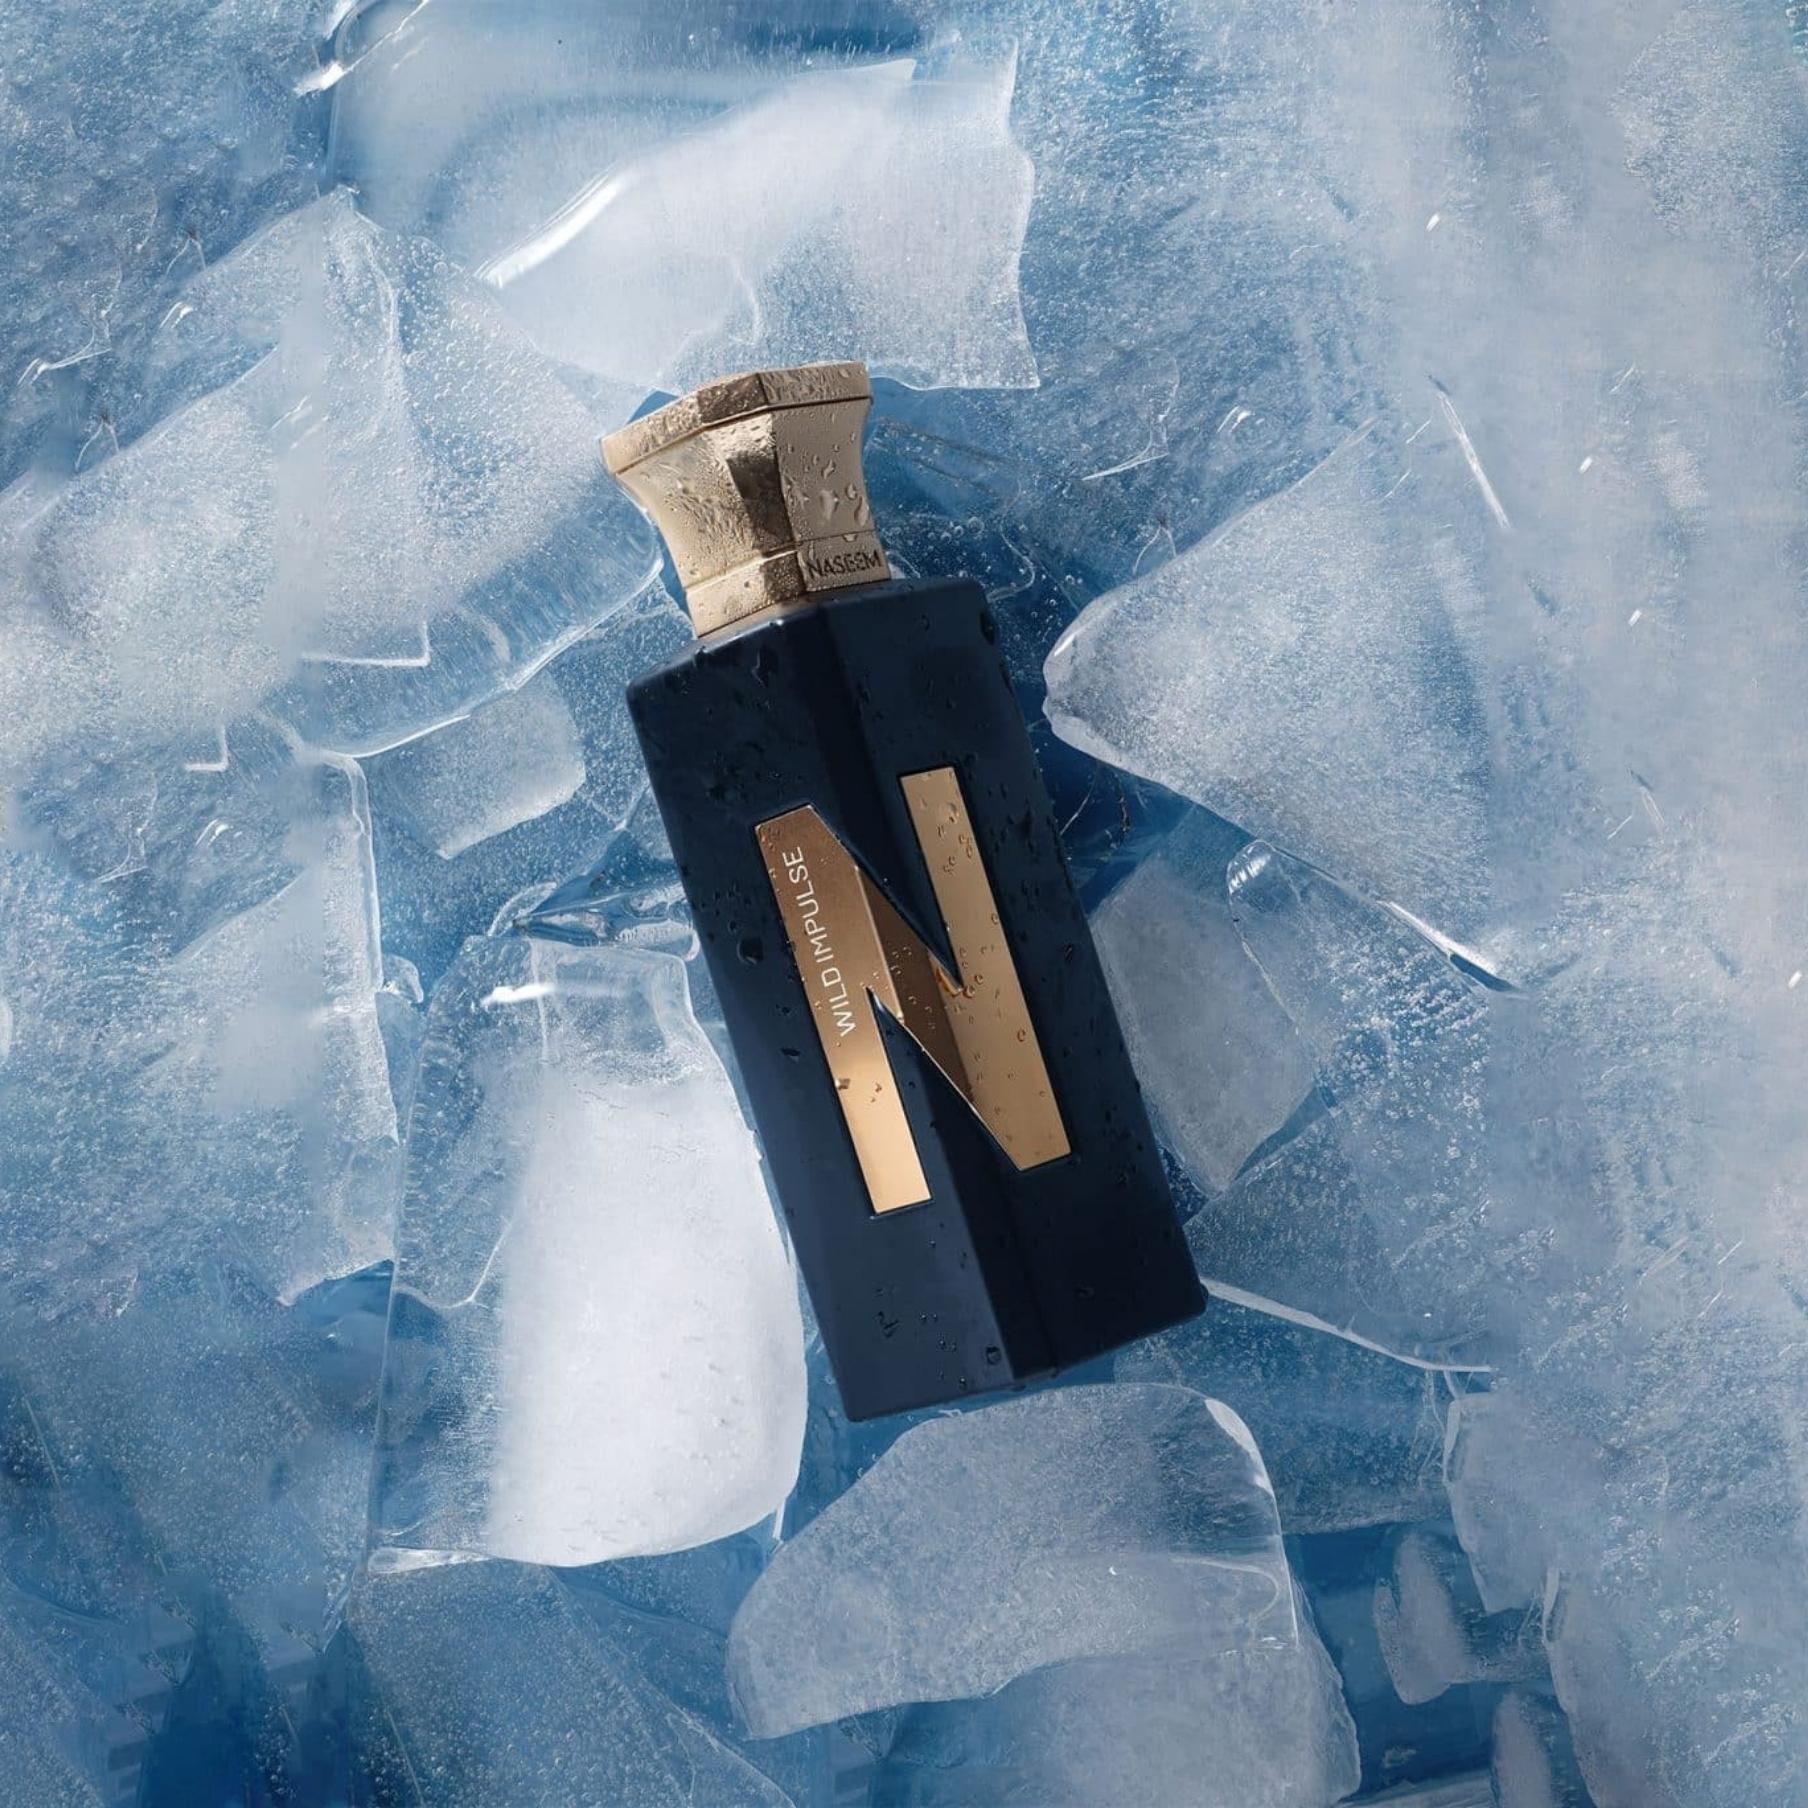 Naseem - Wild Impulse Aqua Parfume 75 Ml